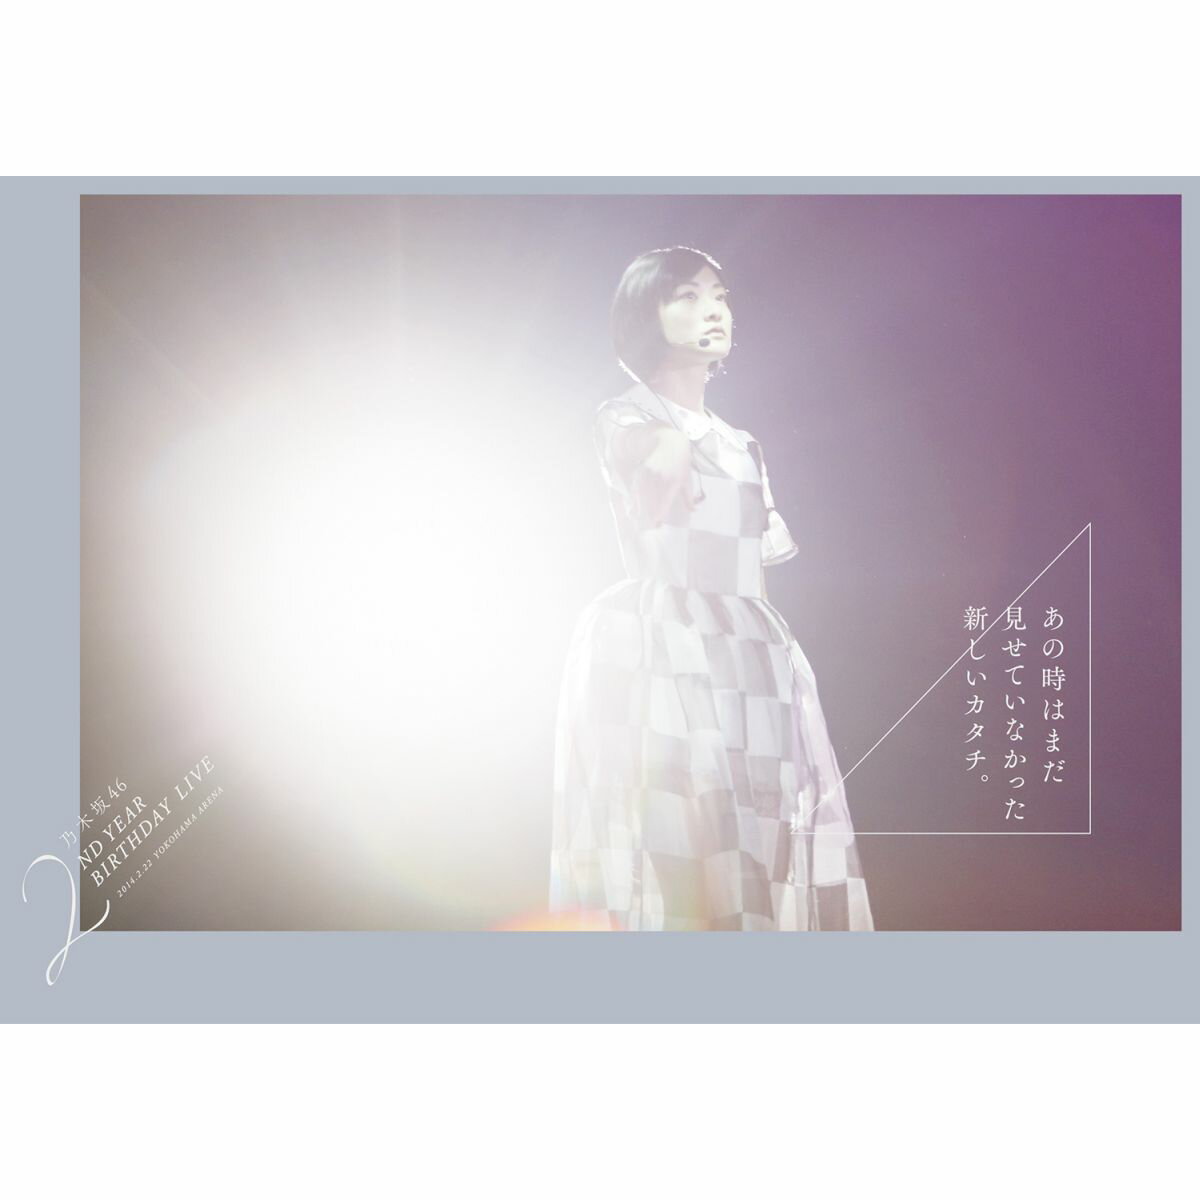 乃木坂46 2ND YEAR BIRTHDAY LIVE 2014.2.22 YOKOHAMA ARENA 【完全生産限定盤】 [ 乃木坂46 ]